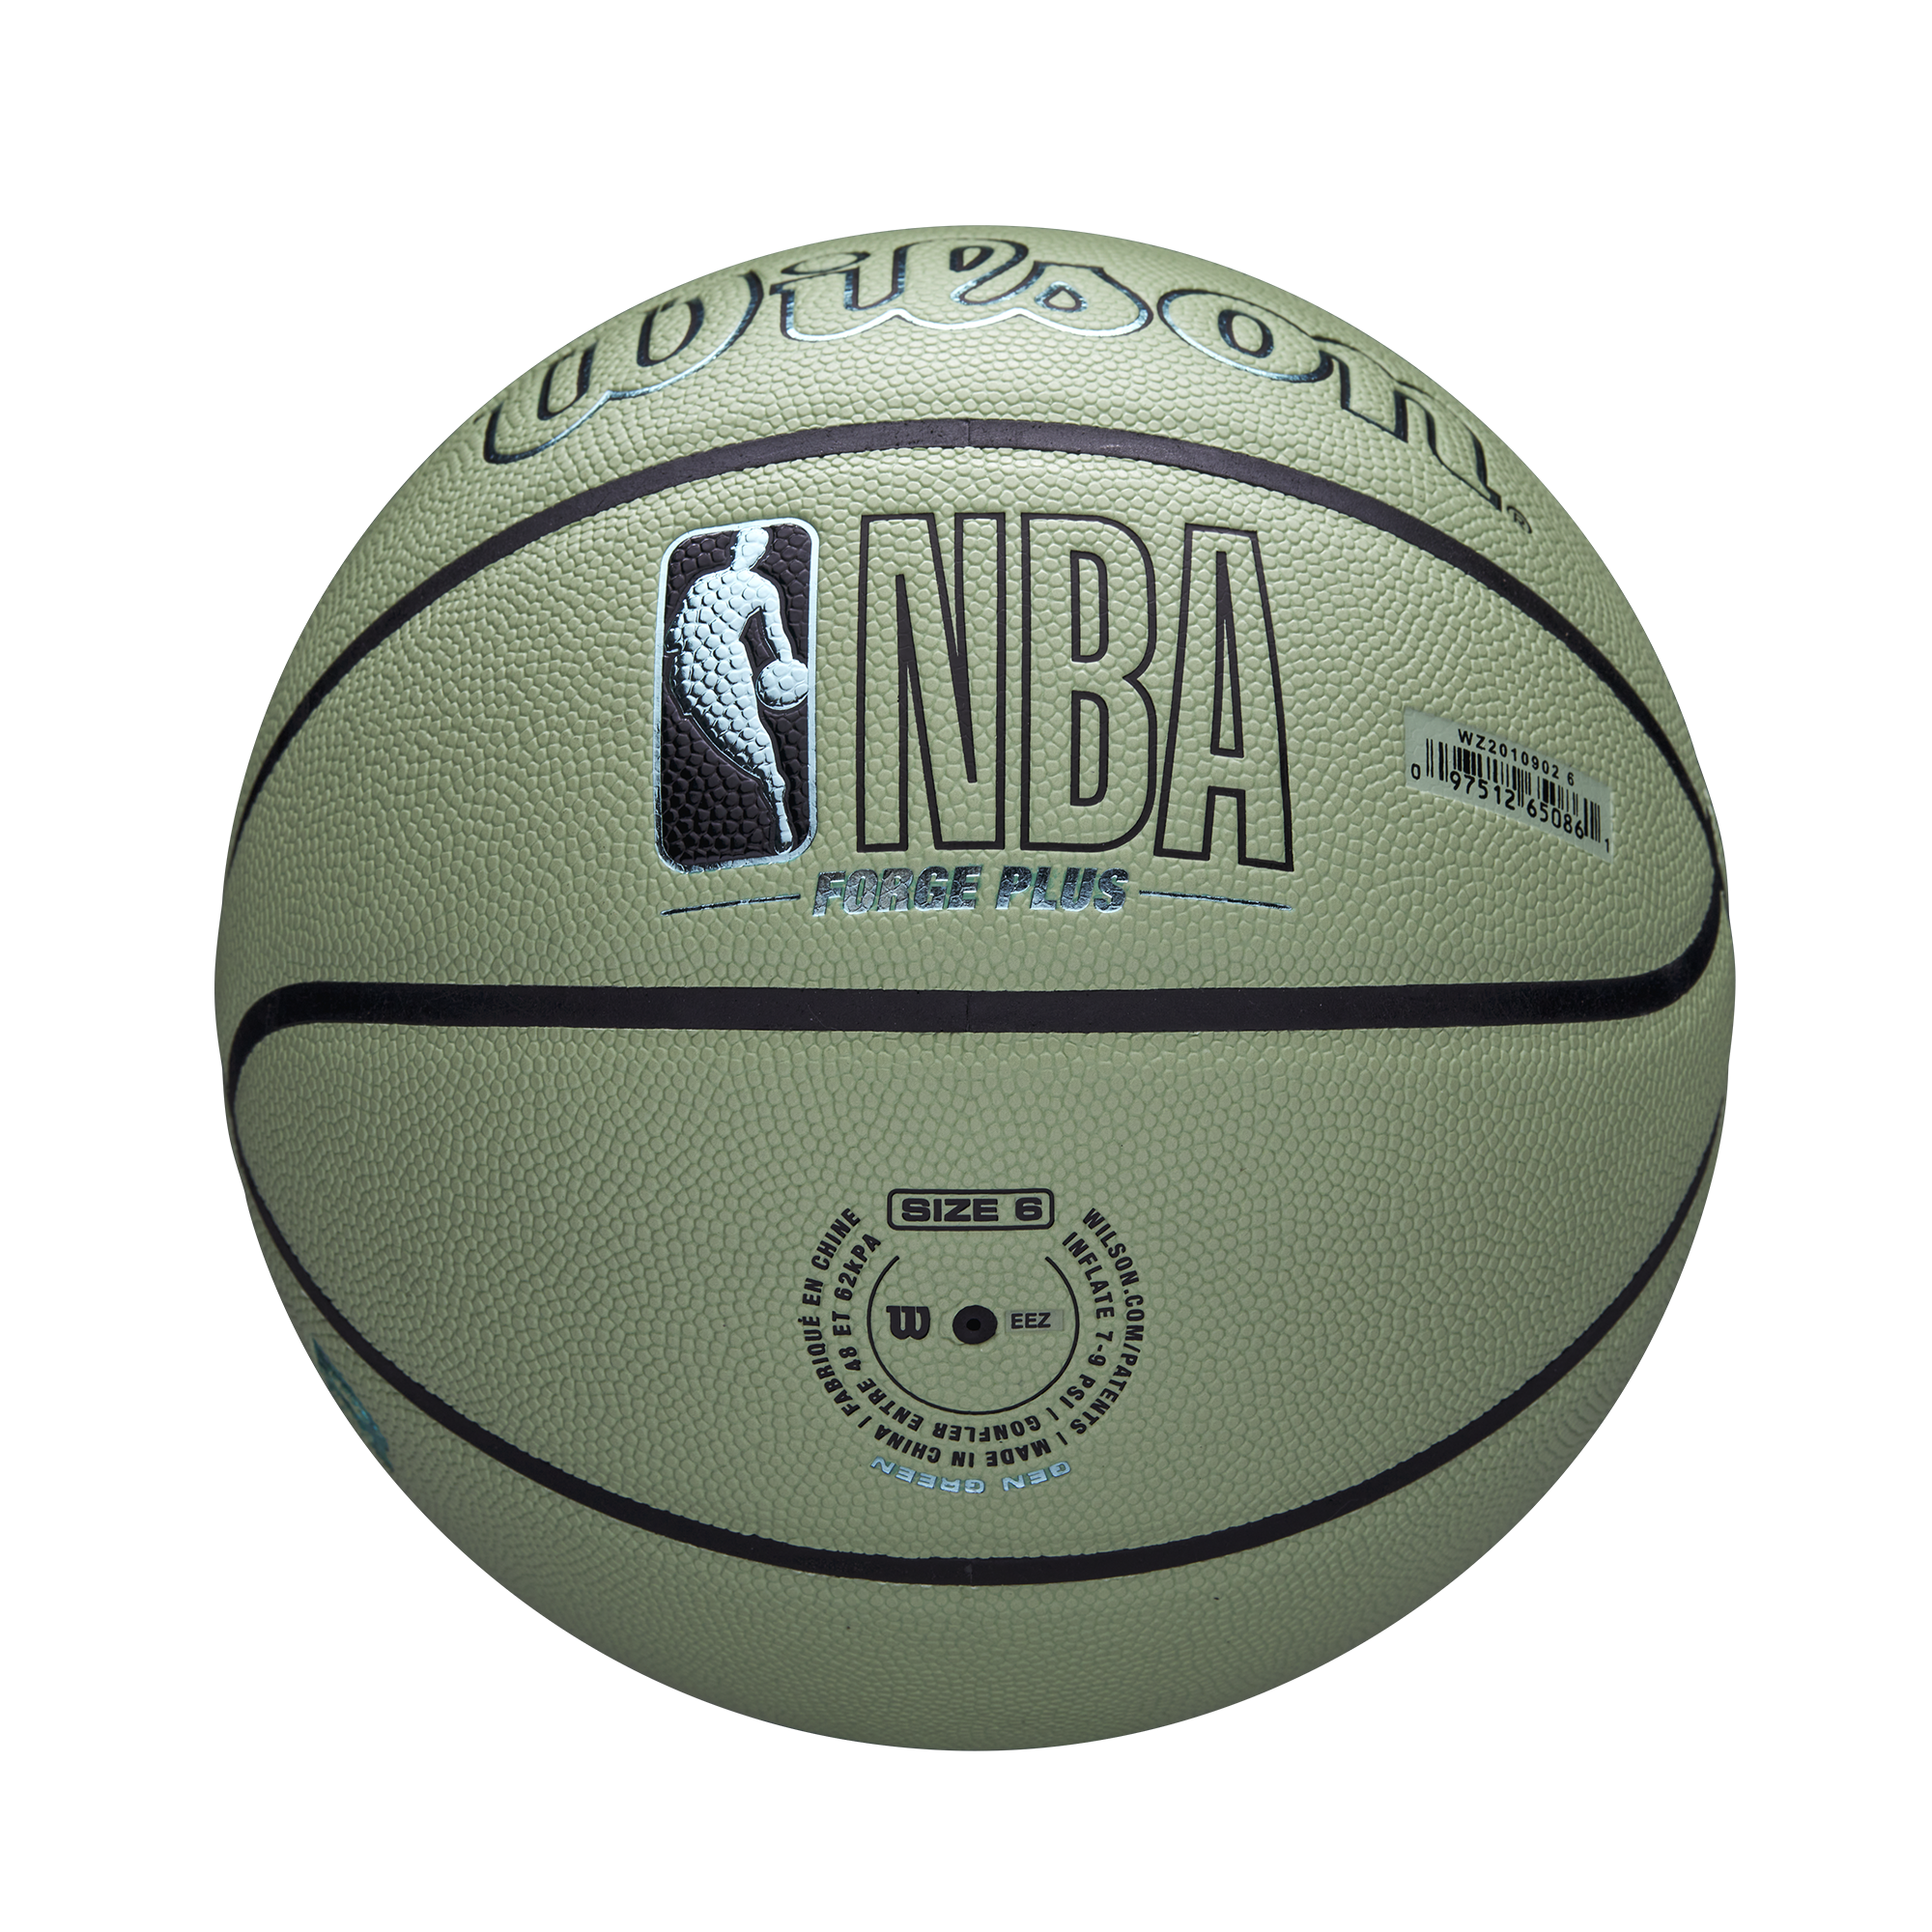 Wilson NBA Forge Plus Eco Indoor/Outdoor Basketball